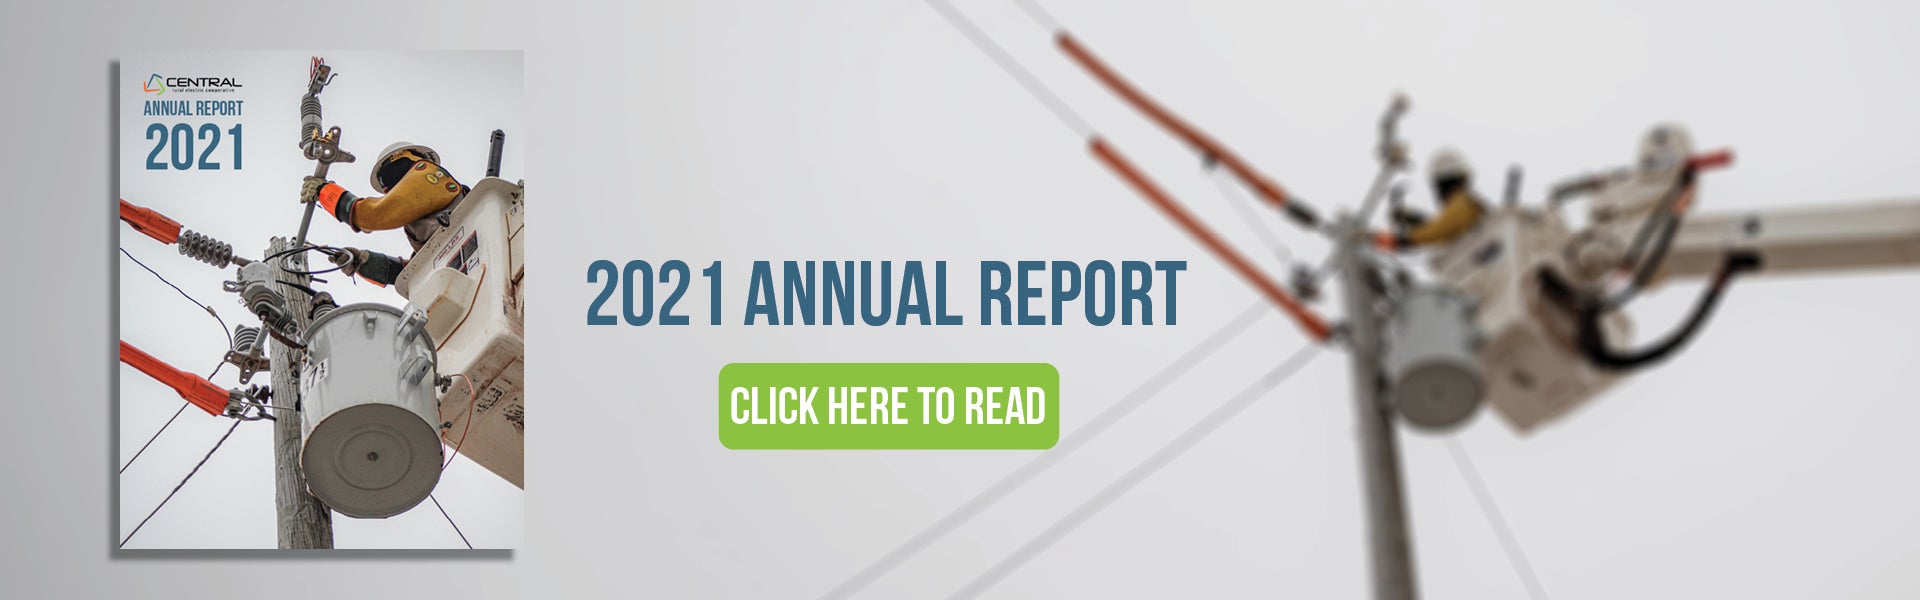 2021 Annual Report, click to read more!